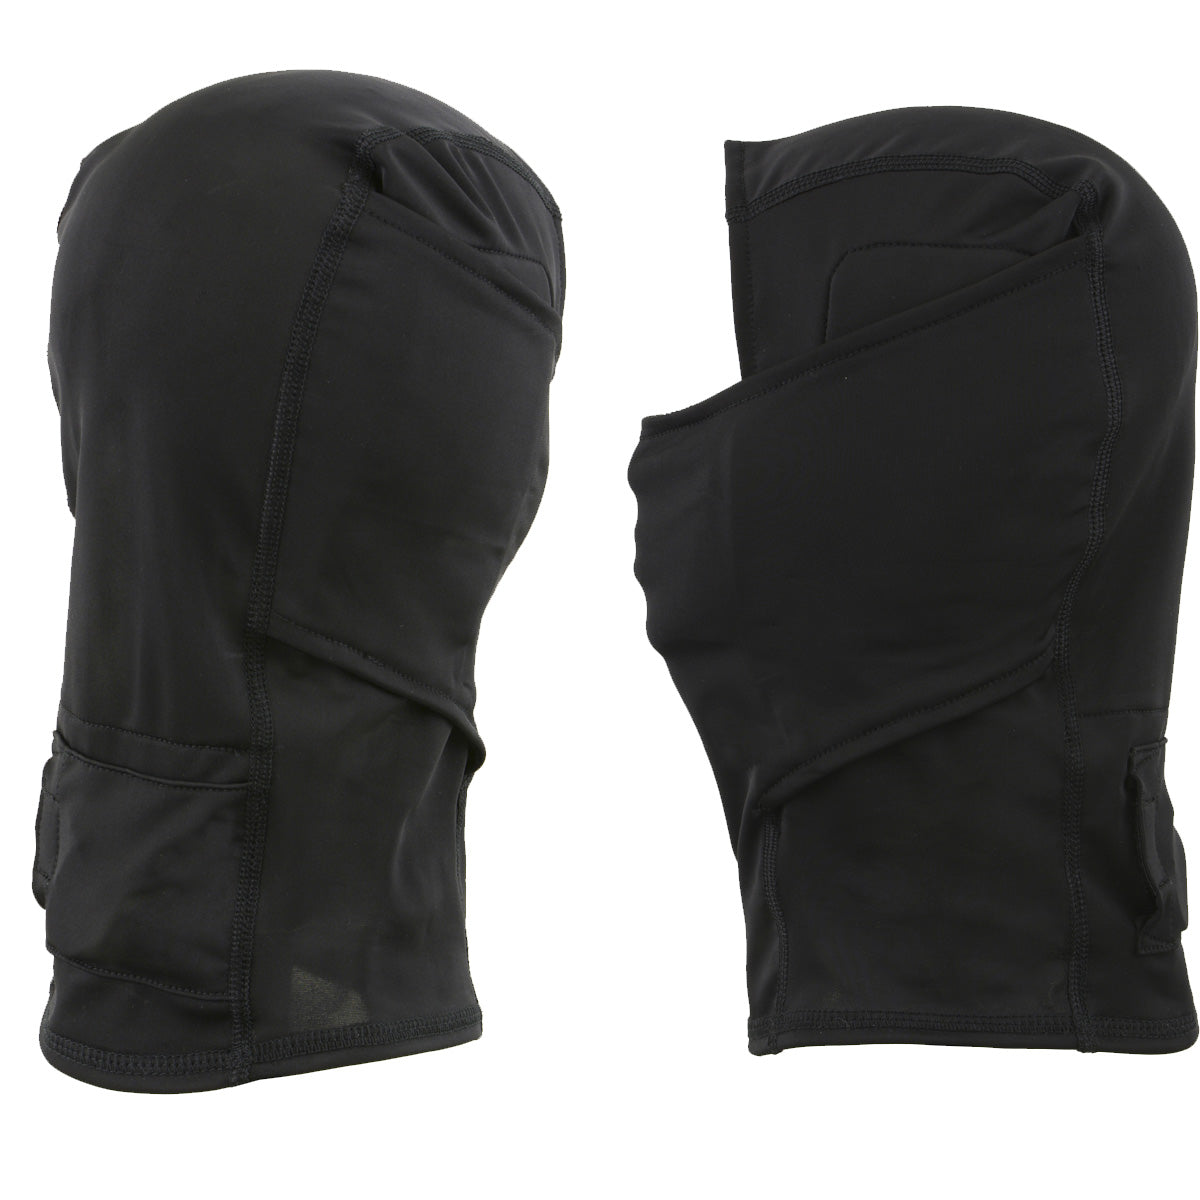 Hot Leathers T72 'Black Widow' Flat Black DOT Half Helmet for Men and Women w/ MP7922FMSET Heated Balaclava Bundle